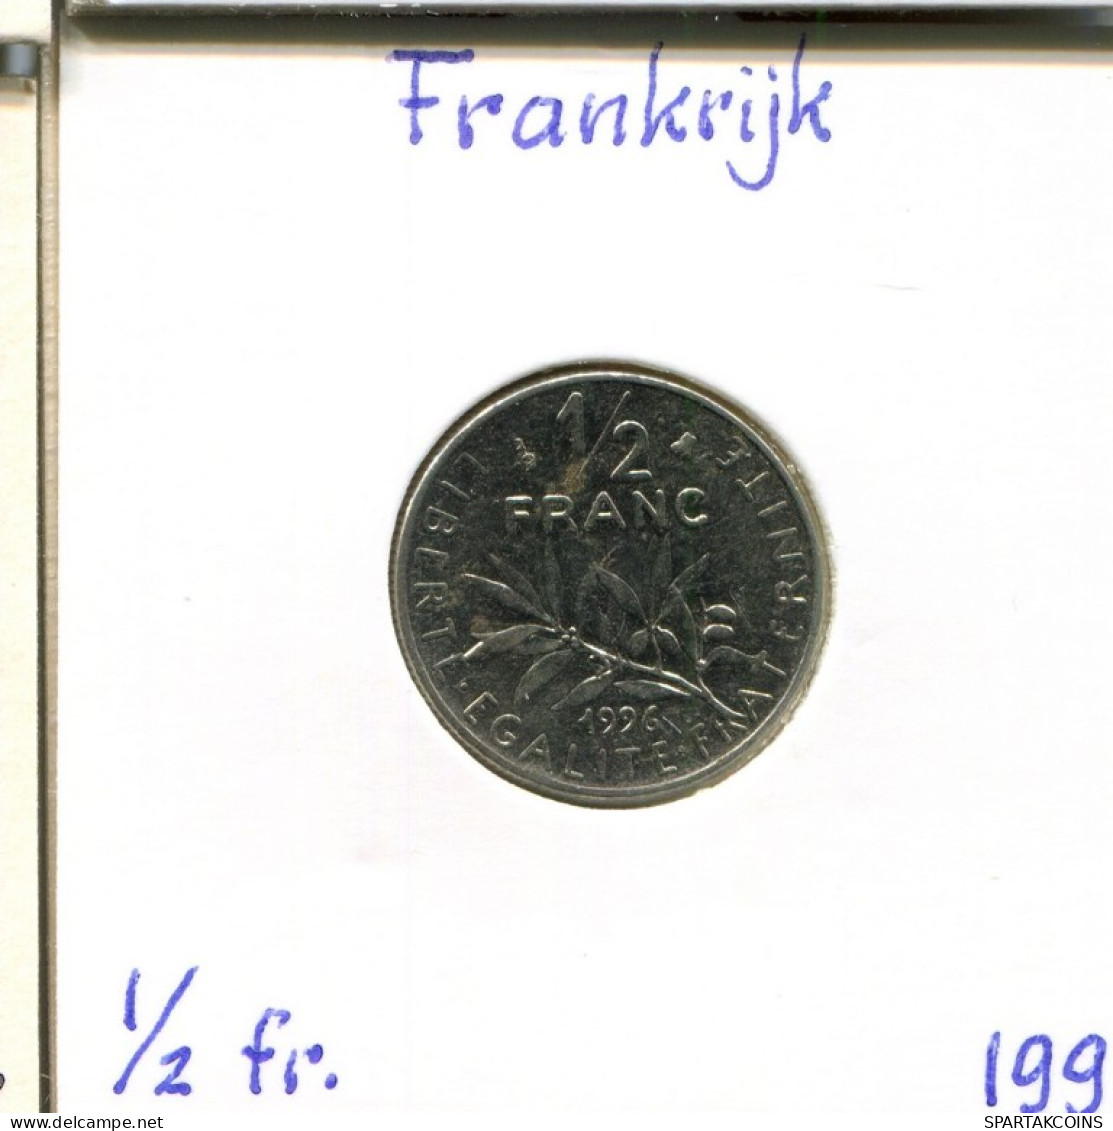 1/2 FRANC 1996 FRANCE Coin French Coin #AM261.U.A - 1/2 Franc